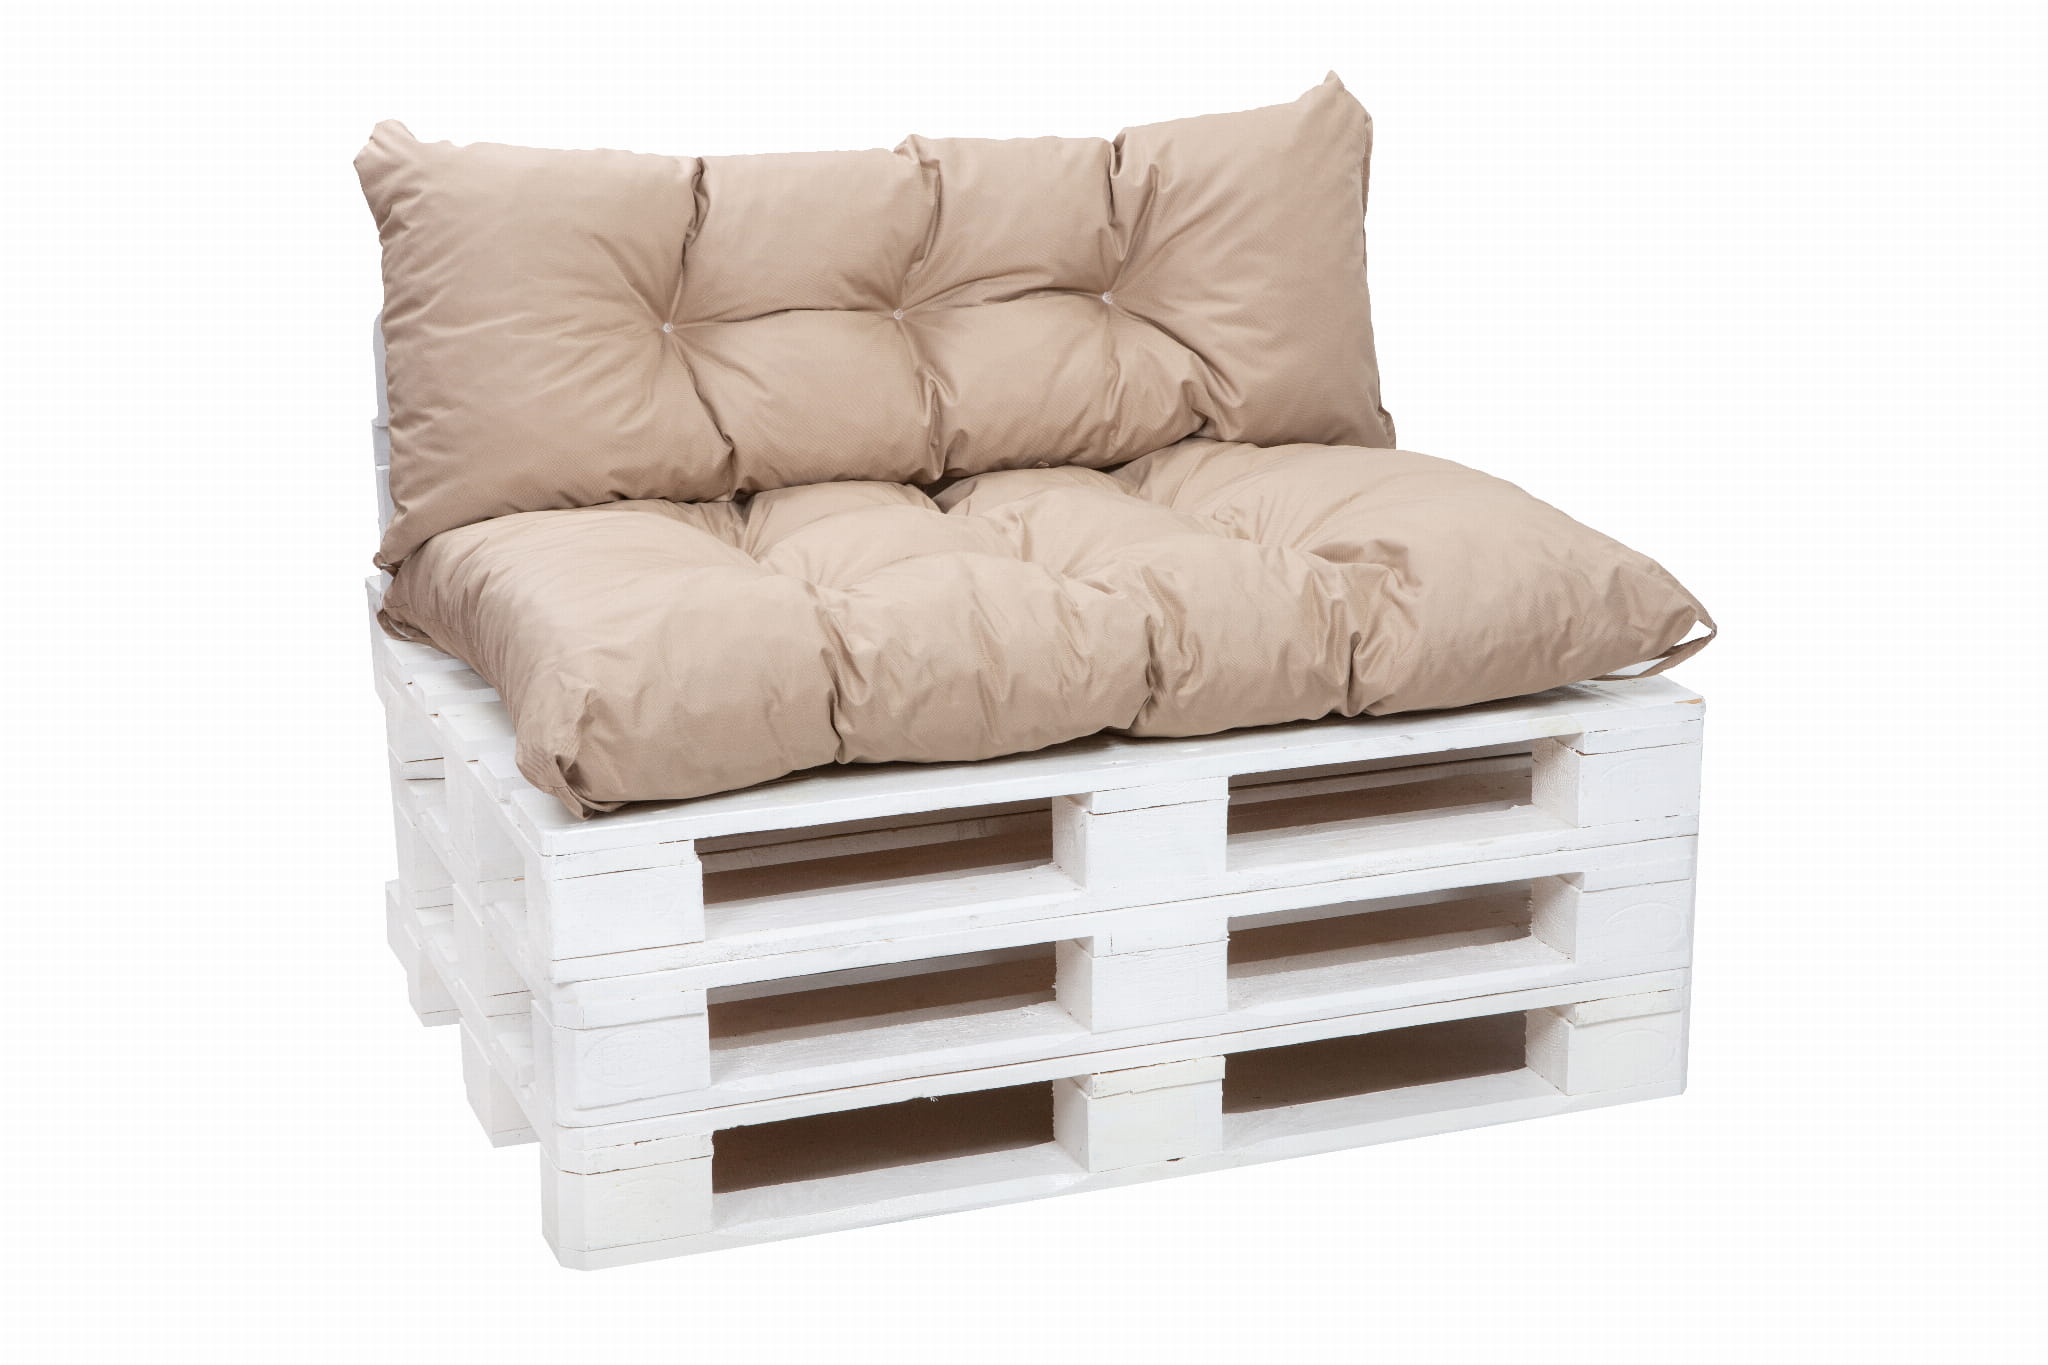 2 cuscini quadrati Cuscino comfort per divano pallet Europa banda seduta 120 x 80 x 10 cm BRAVO HOME Set di 4 cuscini per divano pallet interni/esterni schienale 120 x 50 x 10 cm 